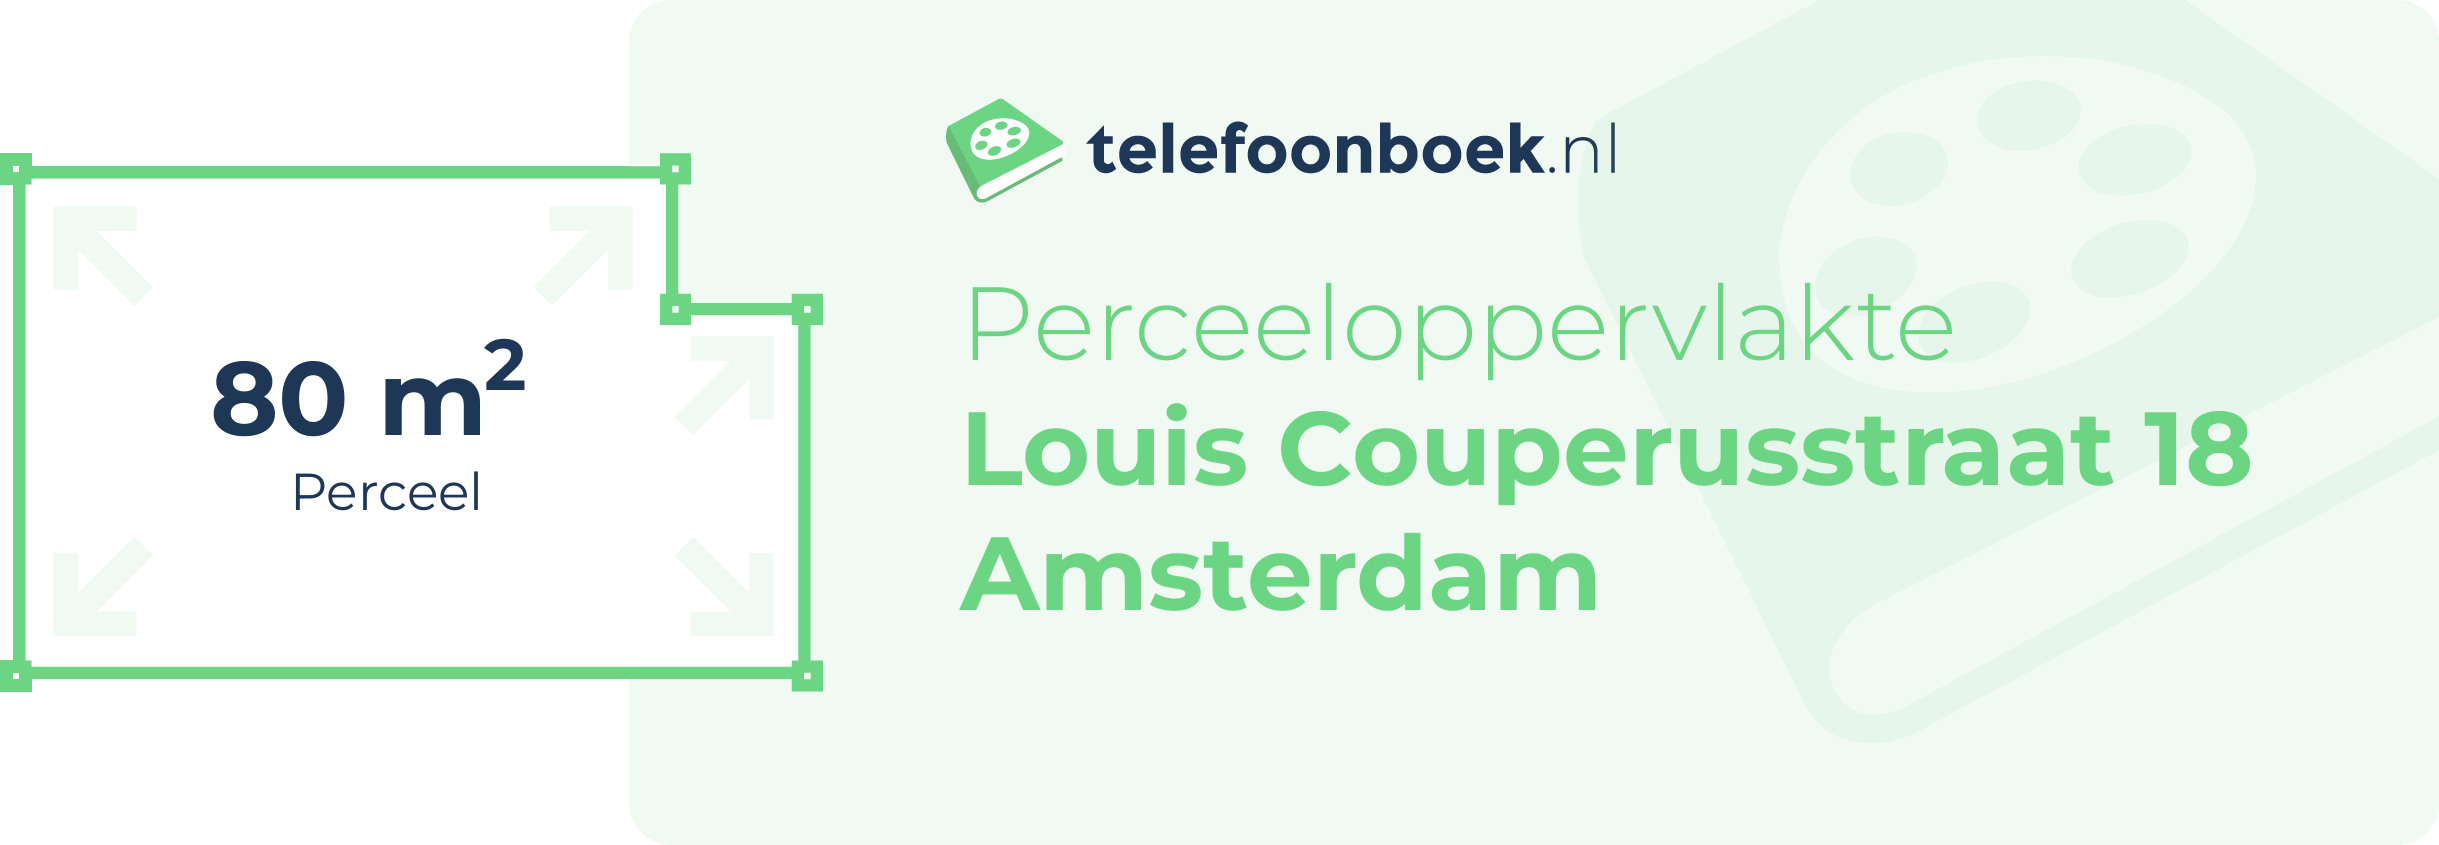 Perceeloppervlakte Louis Couperusstraat 18 Amsterdam